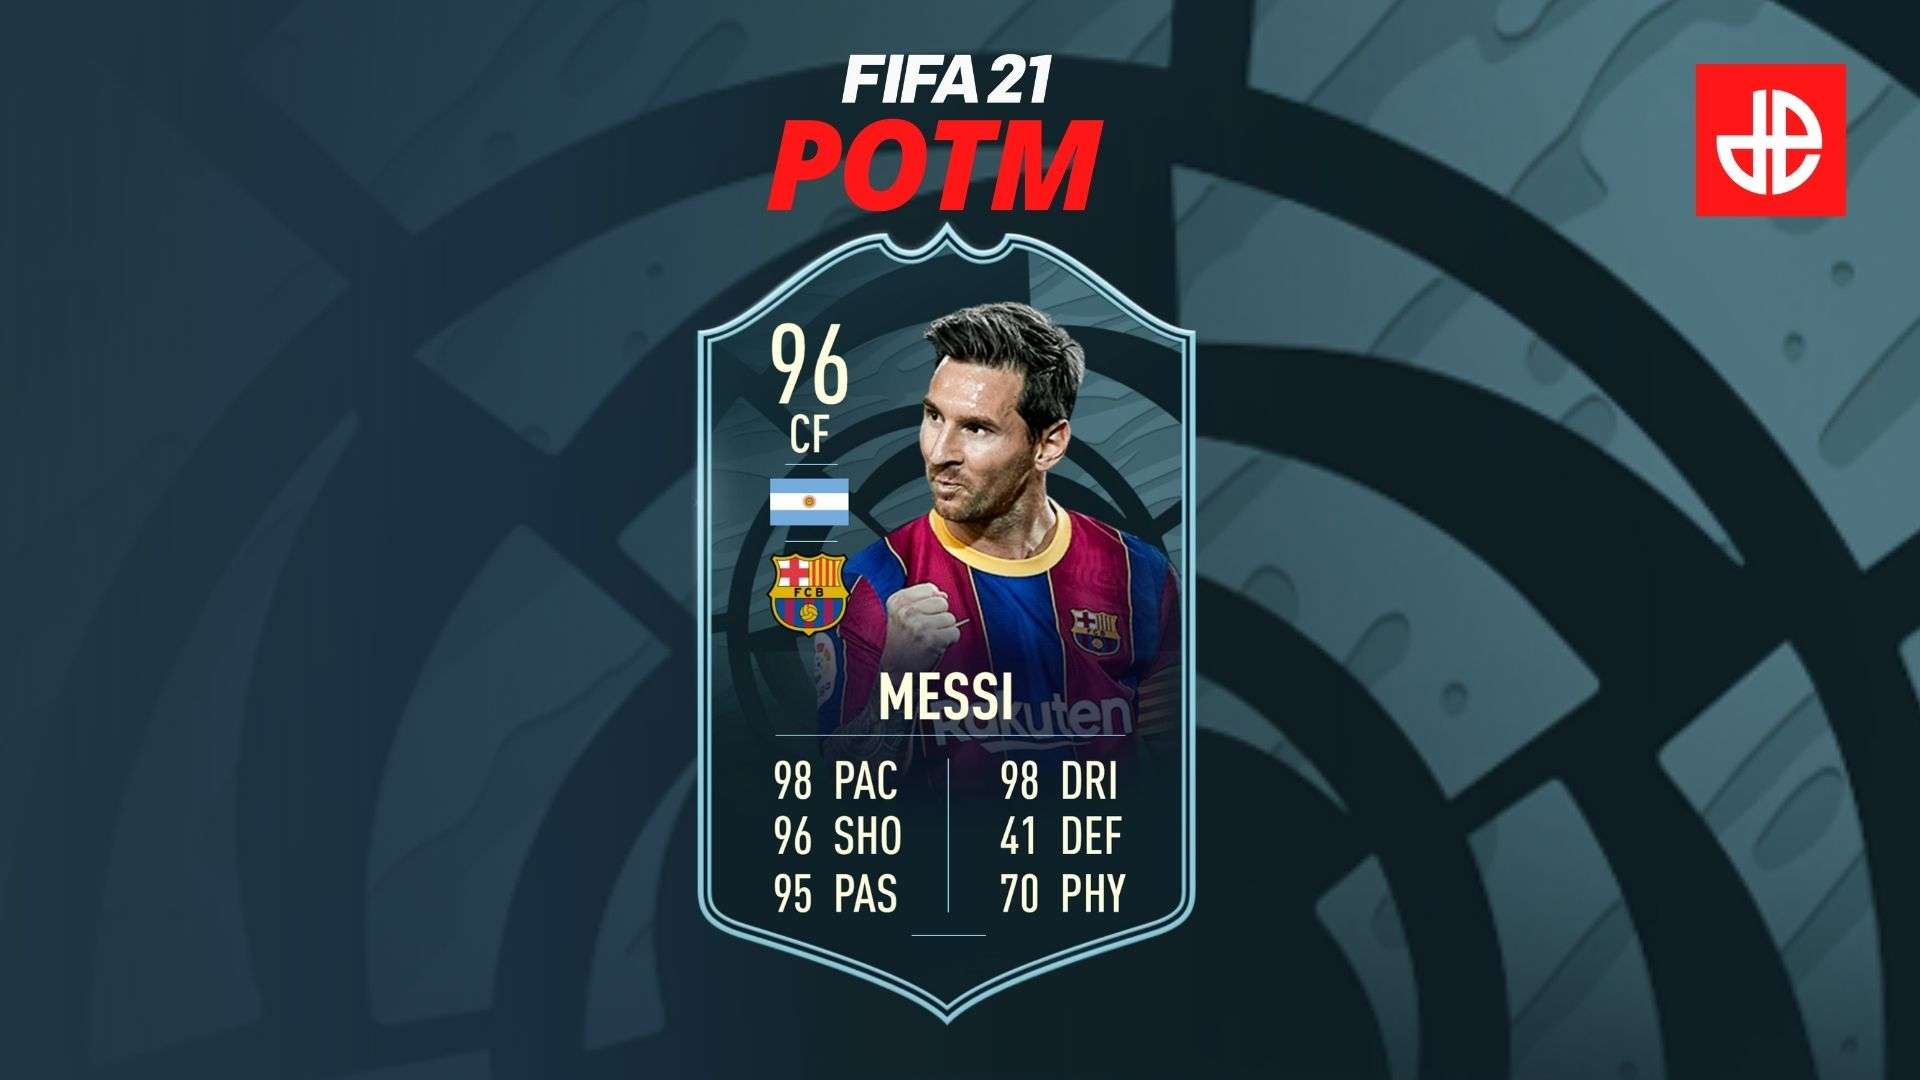 Lionel Messi POTM card in FIFA 21